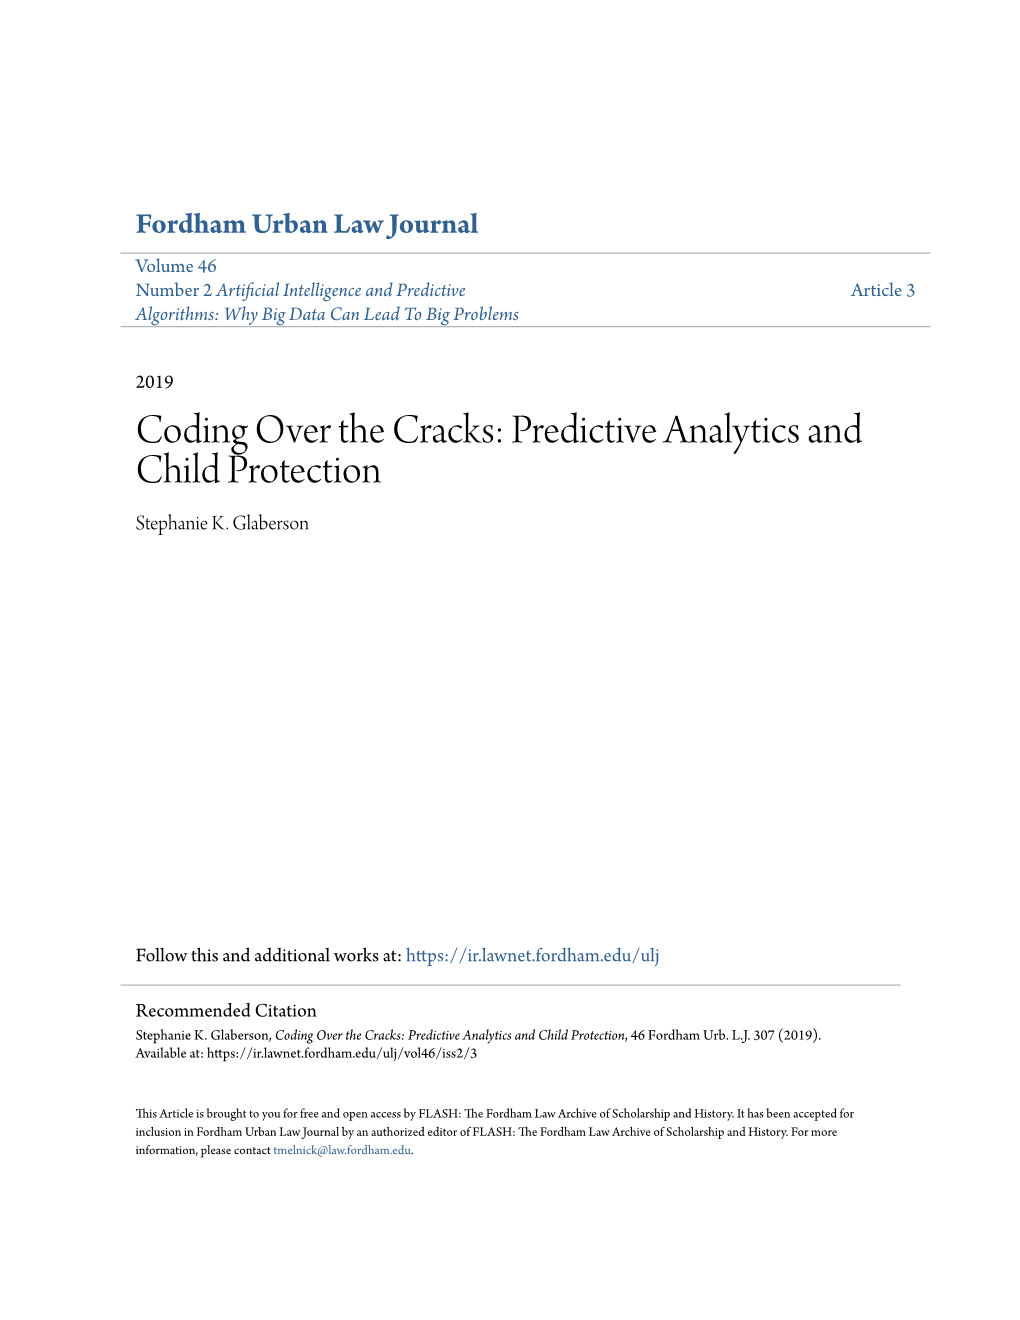 Predictive Analytics and Child Protection Stephanie K